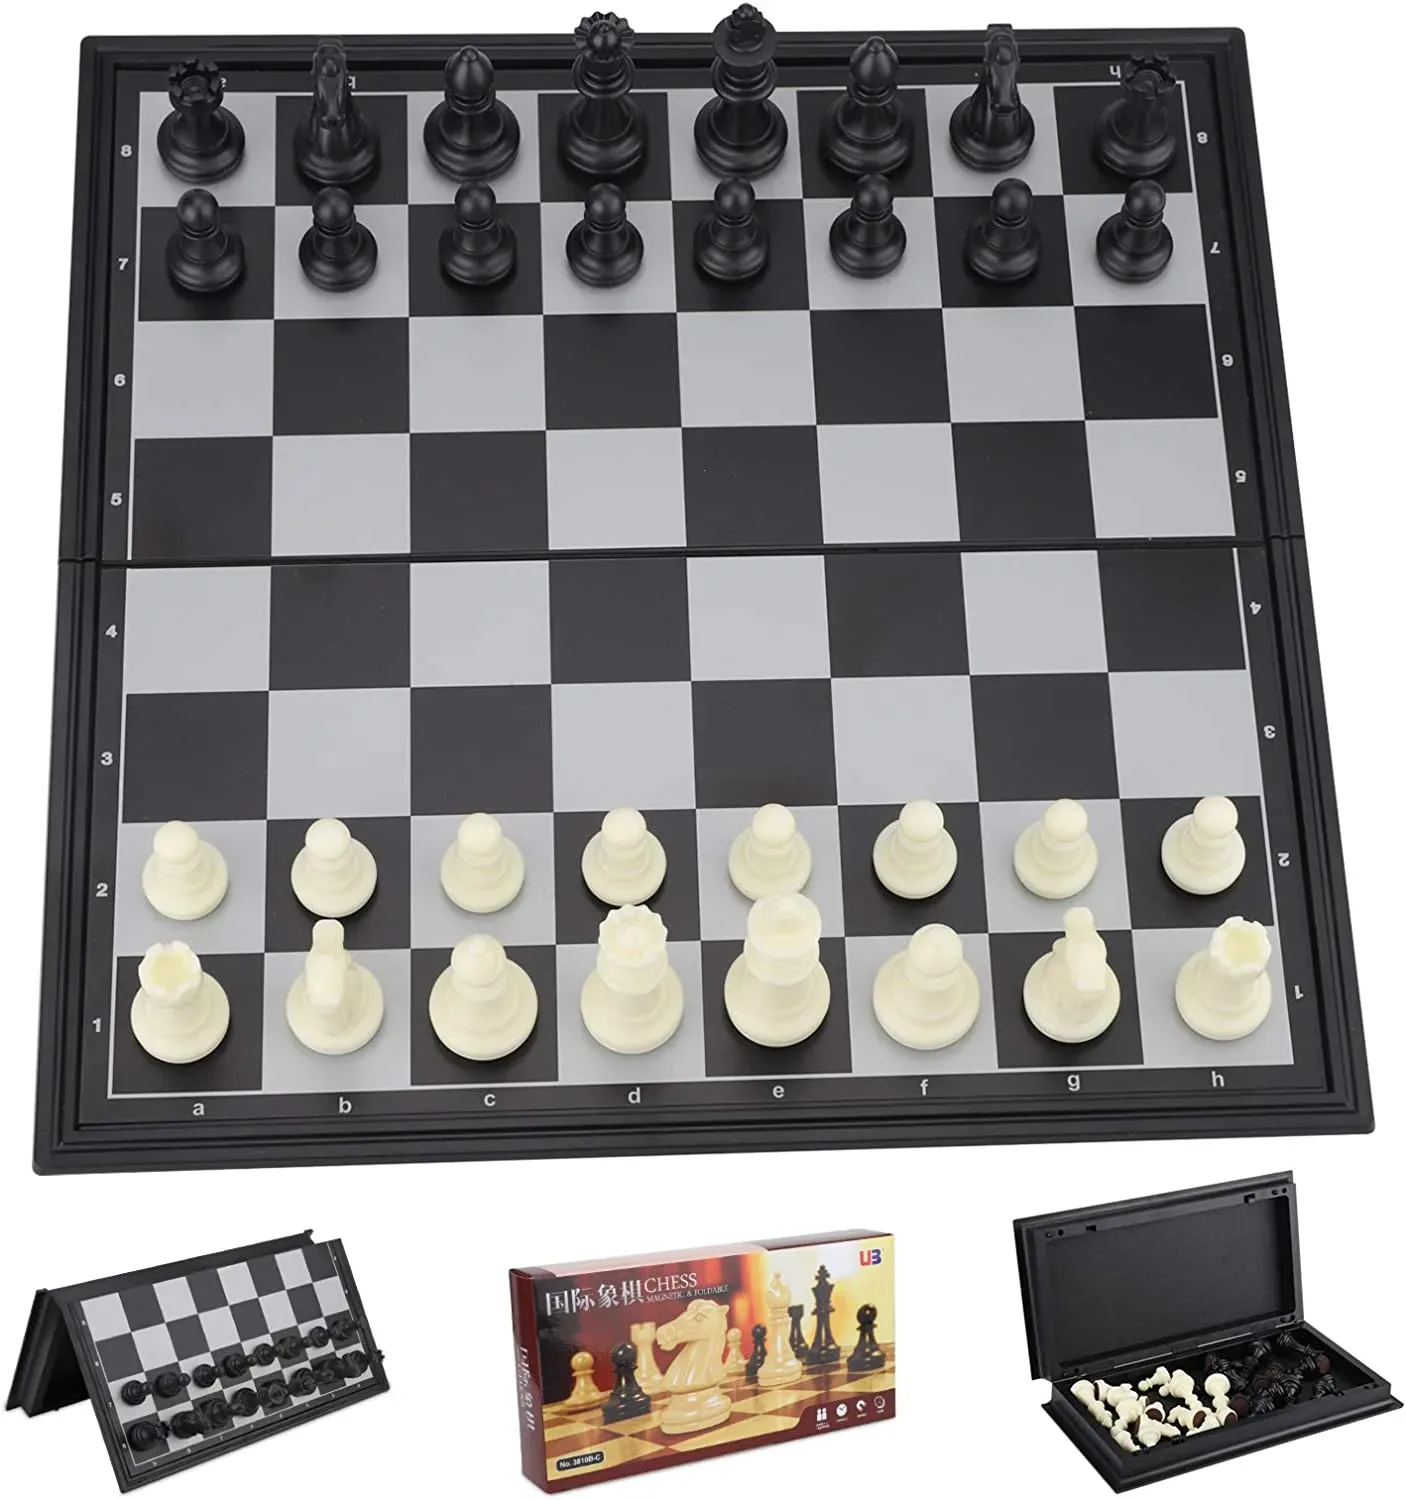 Ver categoría de ajedrez de plástico magnético plegable chuertech